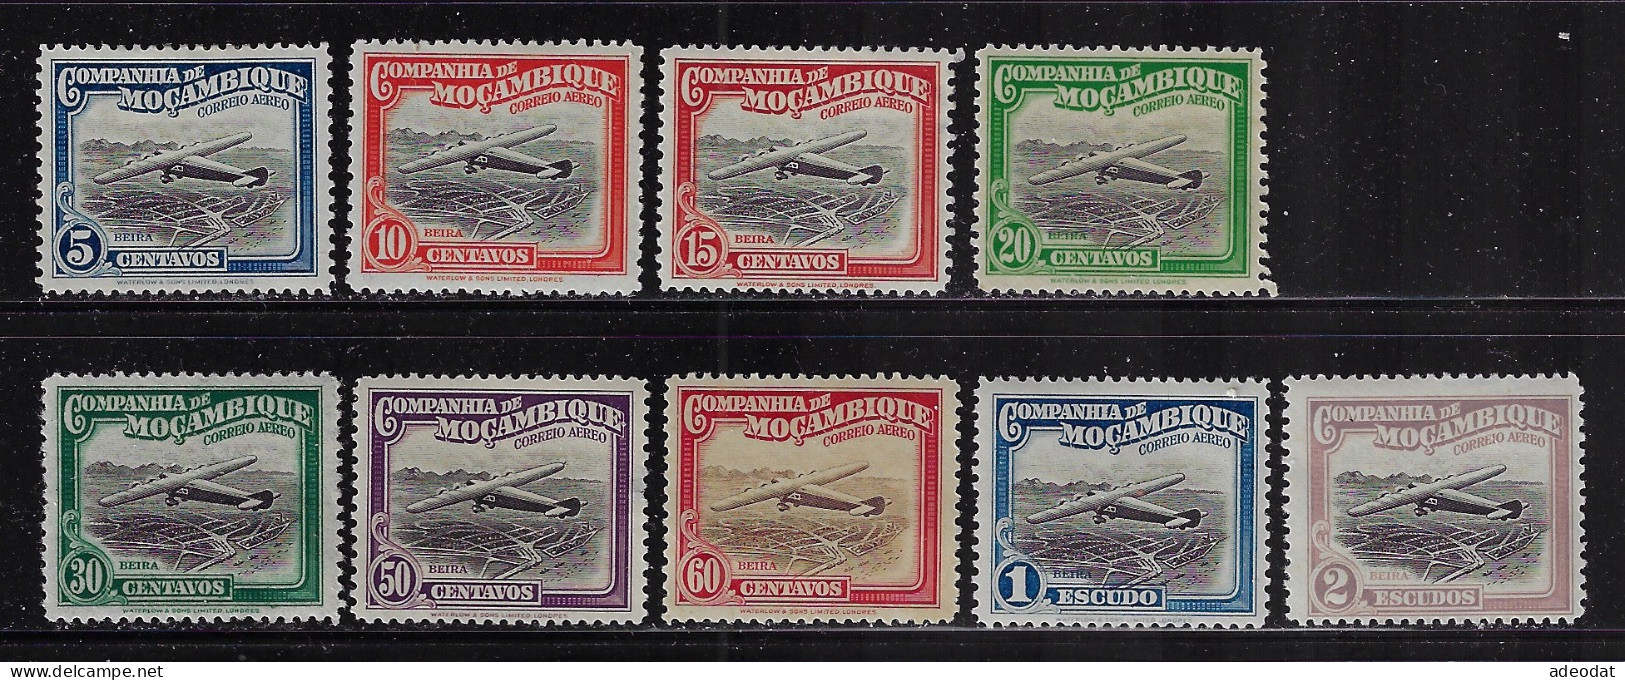 MOZAMBIQUE COMPANY 1935  SCOTT#C1-C5,C8,C9,C11,C12  MH CV $3.55 - Mosambik